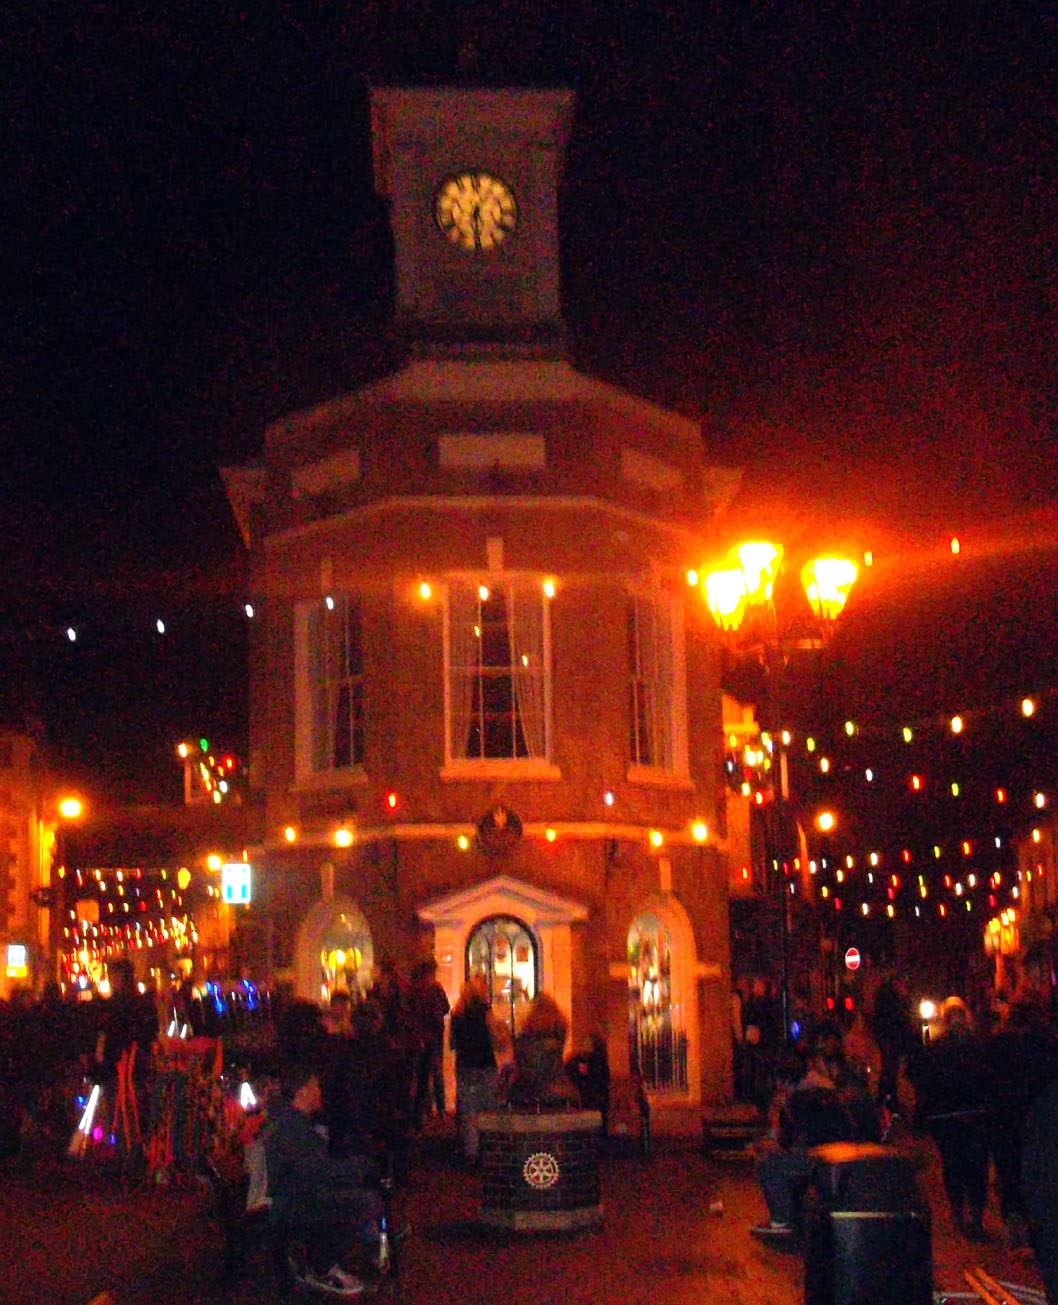 Brigg Christmas Lights 2013 featuring the Buttercross